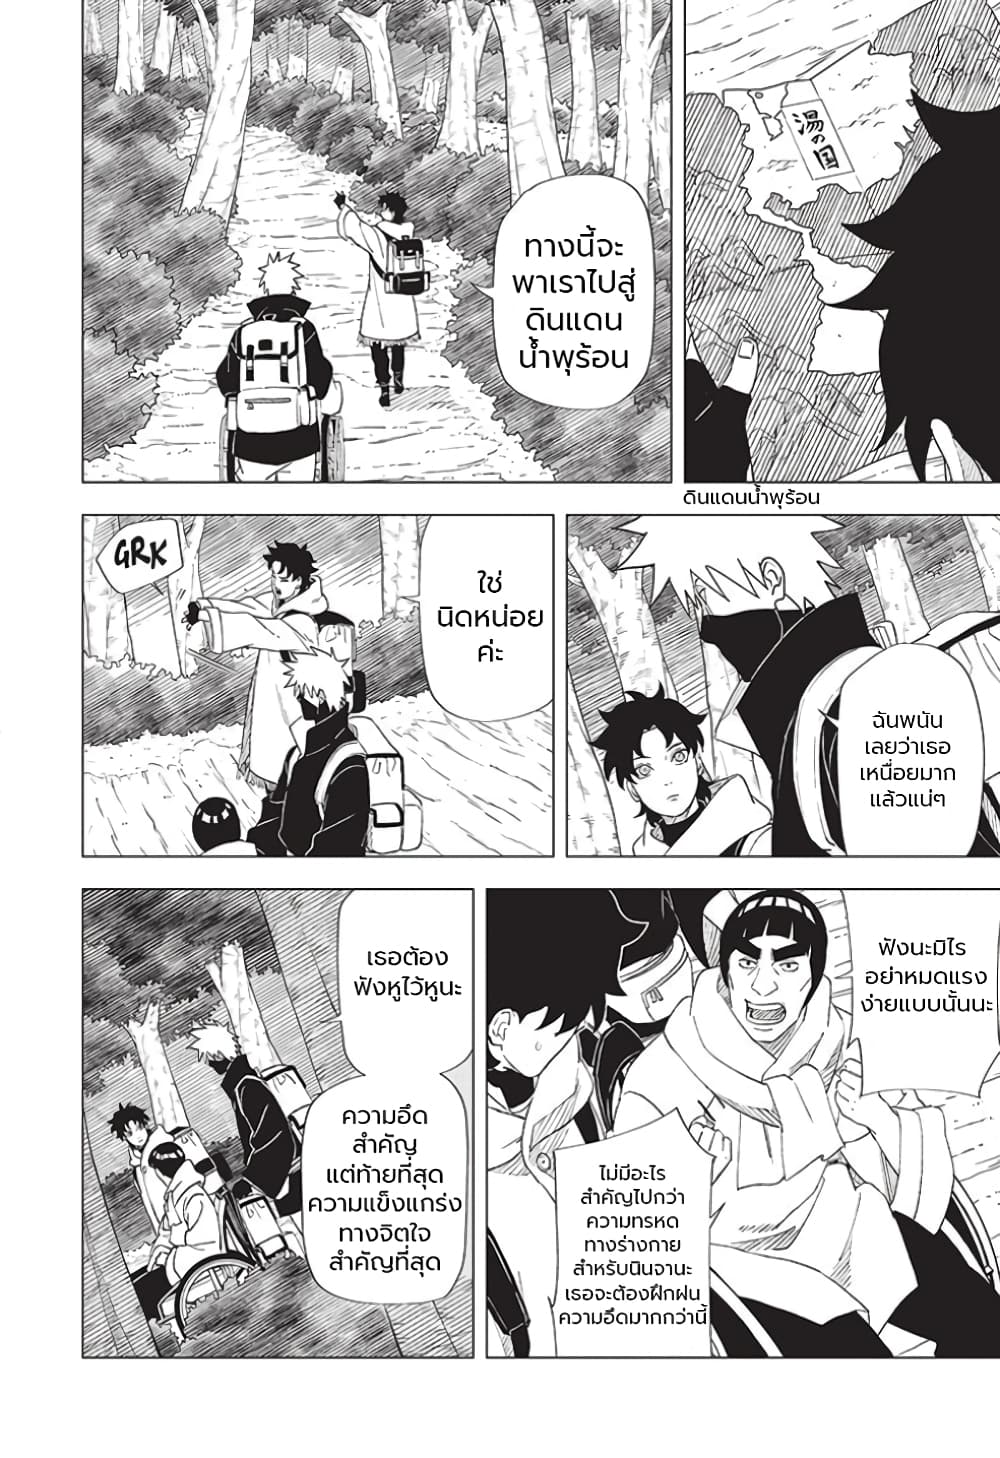 Naruto Konoha’s Story – The Steam Ninja Scrolls The Manga ตอนที่ 4 (14)